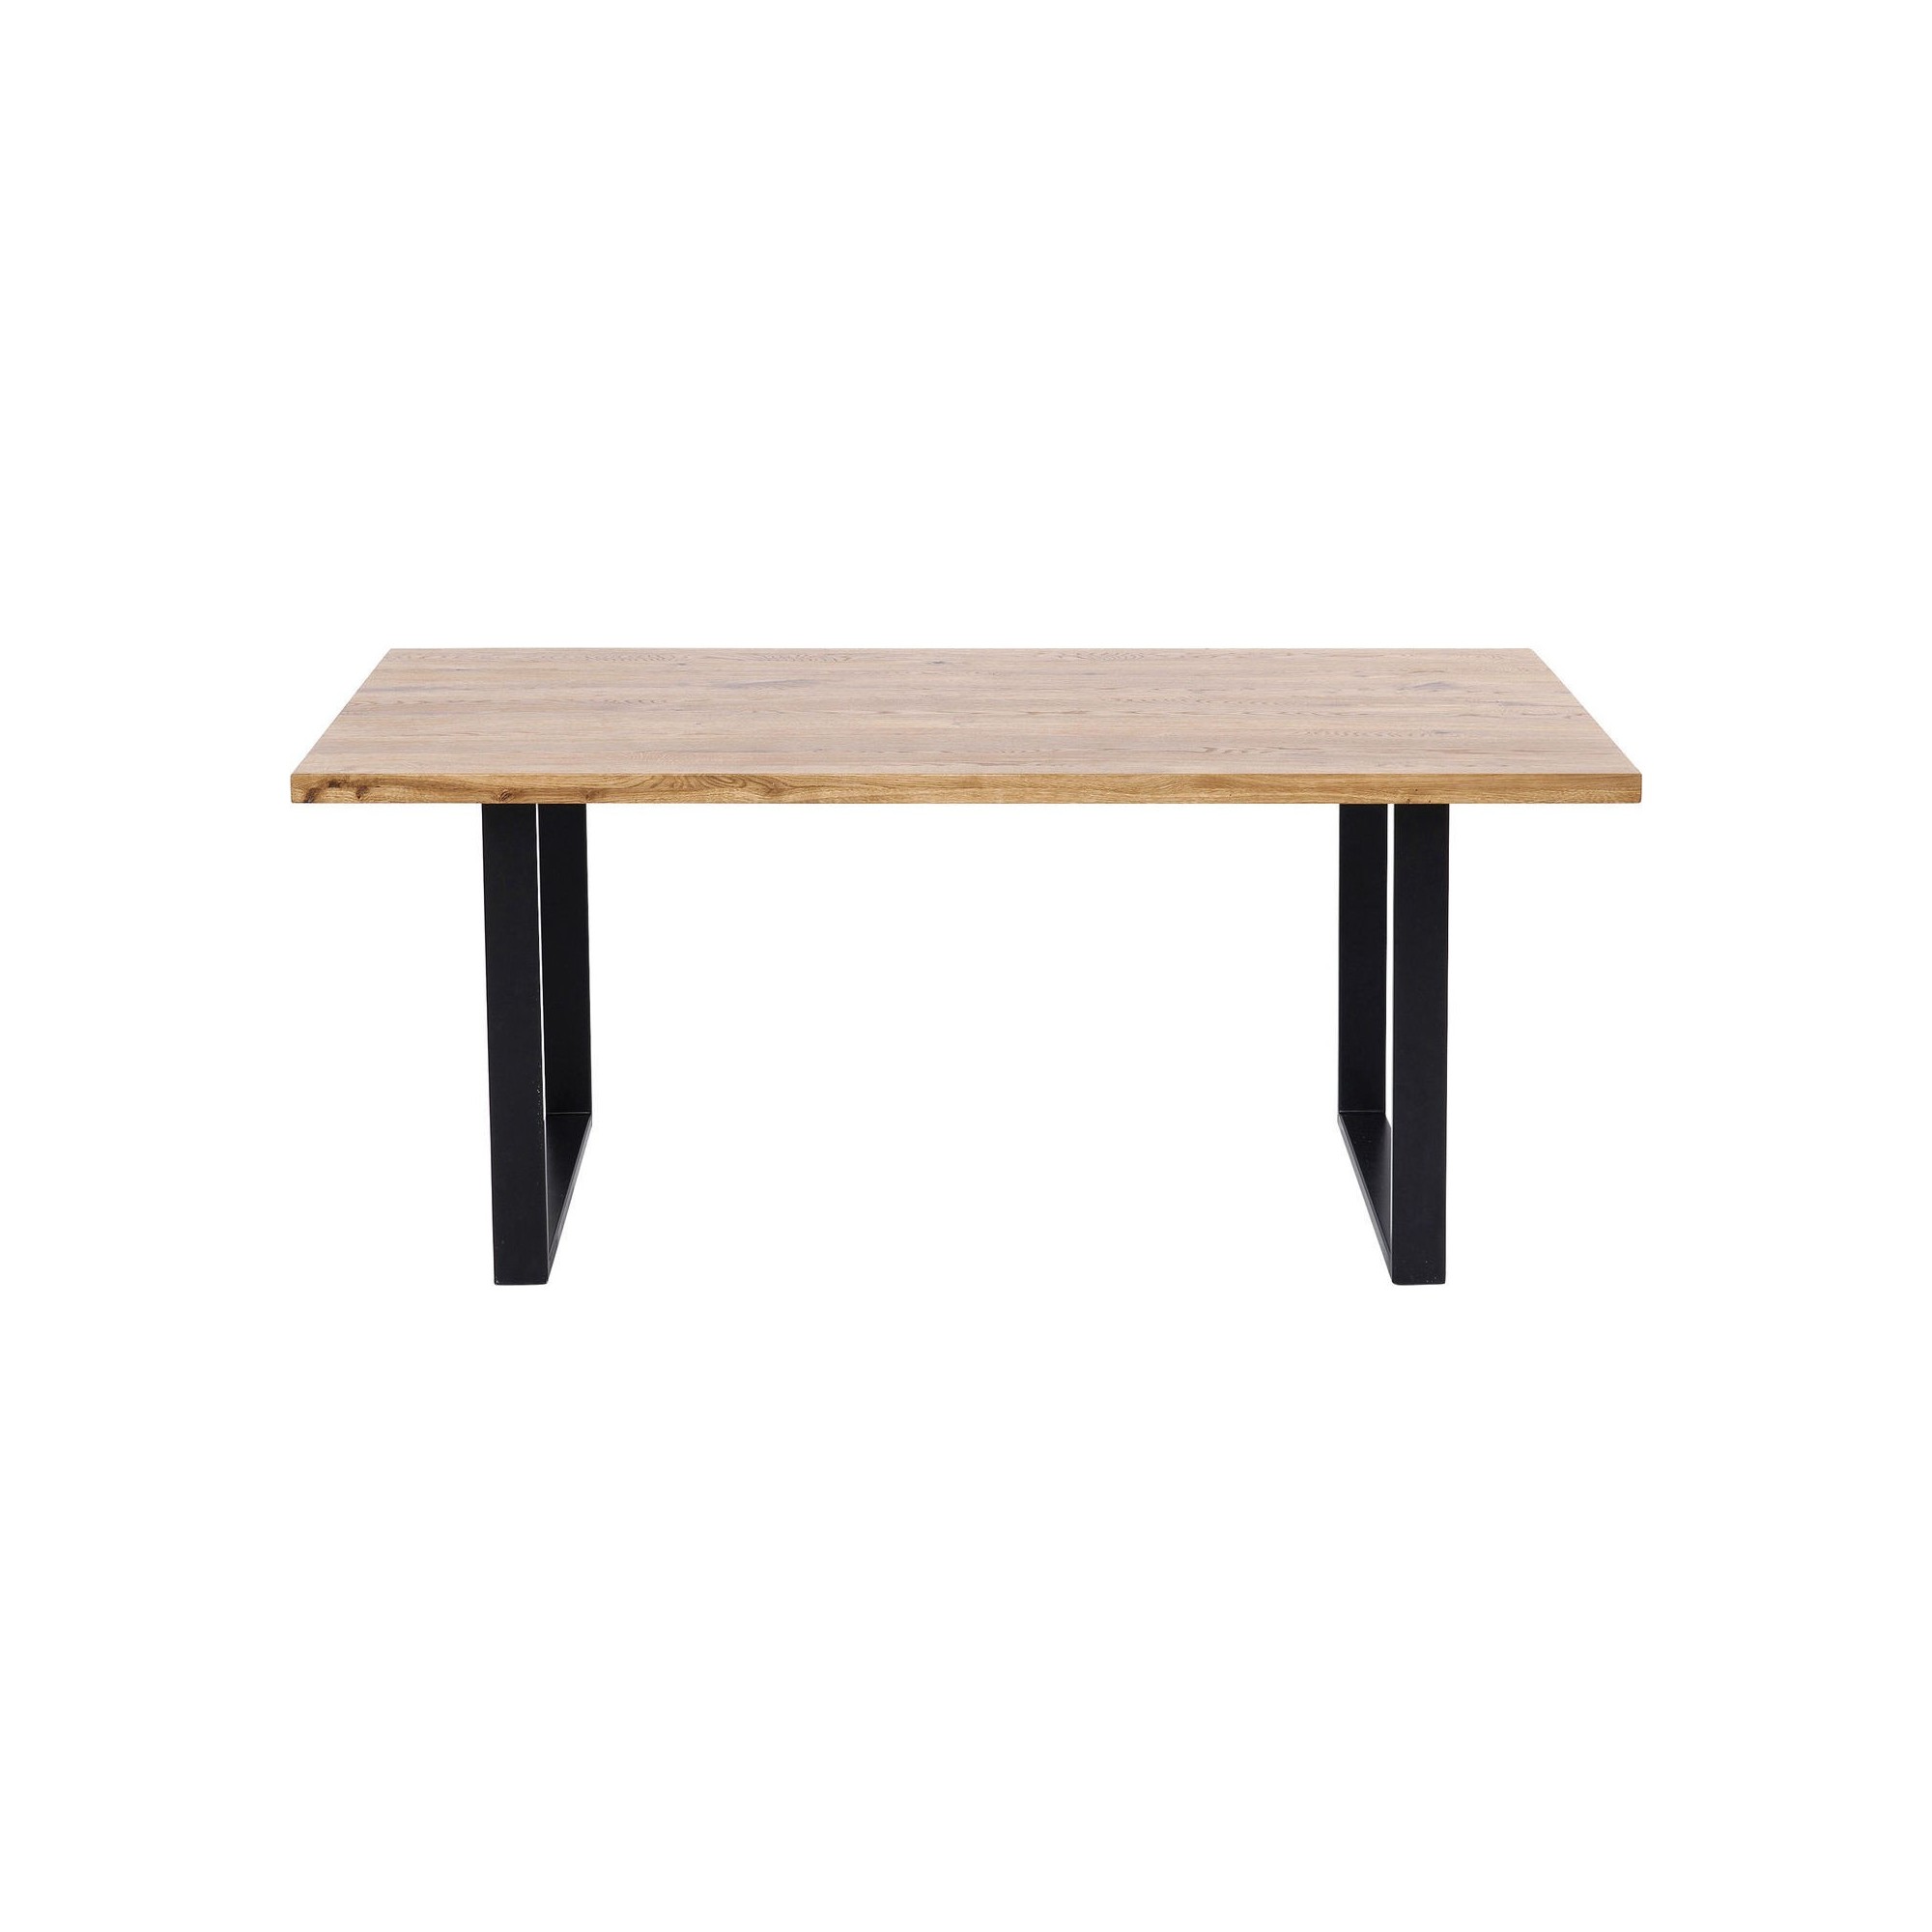 Table Jackie chêne noire 160x80cm Kare Design